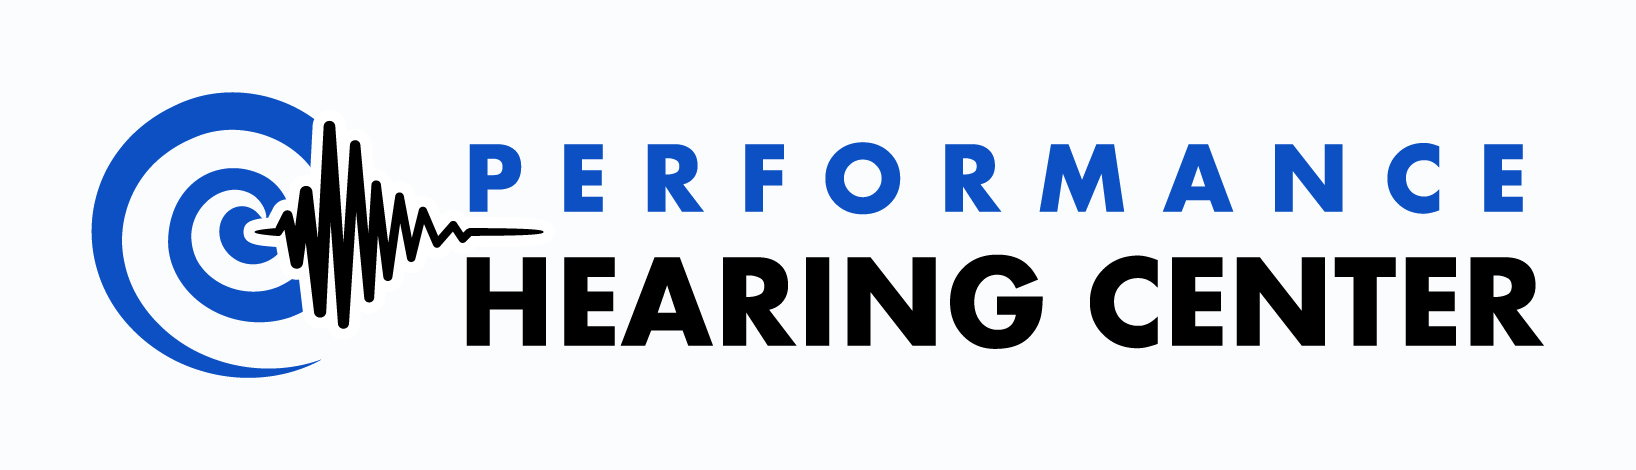 Performance Hearing Center - Winnetka logo